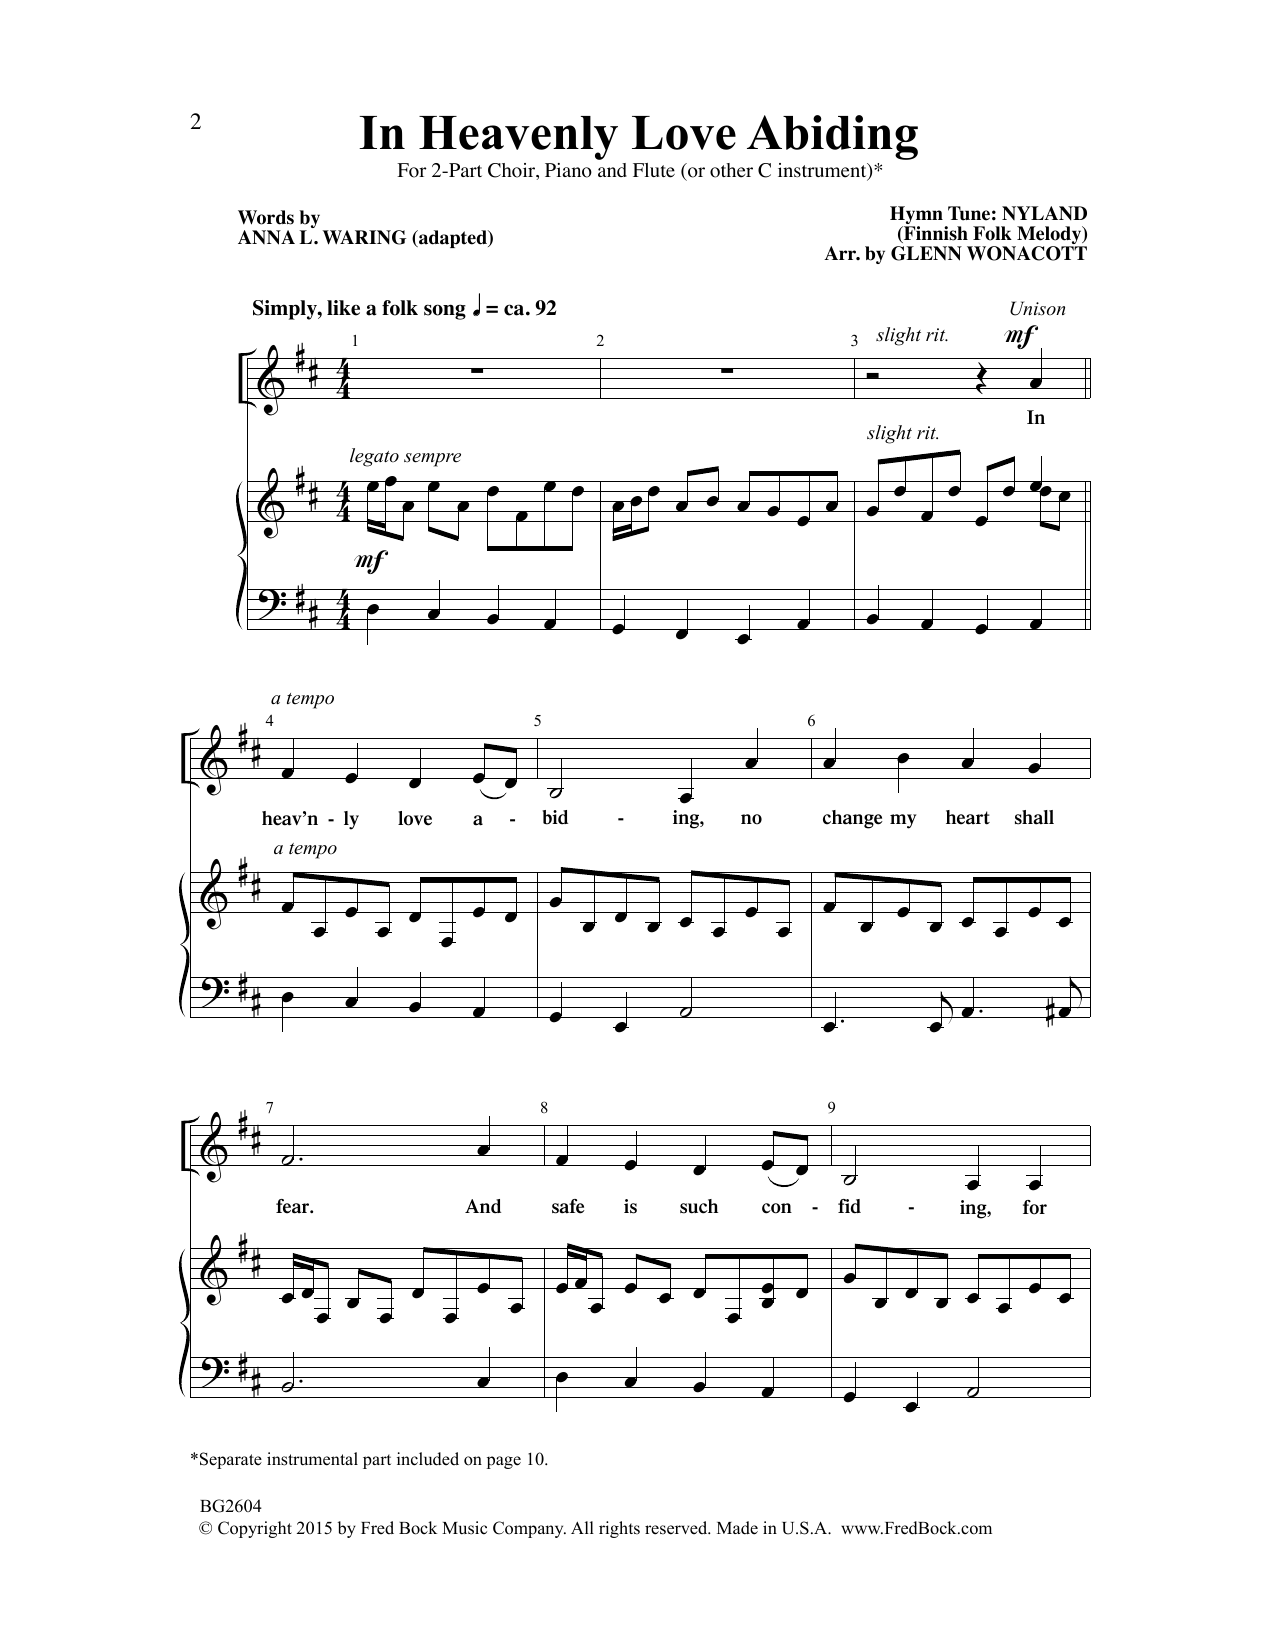 Finnish Folk Melody In Heavenly Love Abiding (arr. Glenn Wonacott) Sheet Music Notes & Chords for SATB Choir - Download or Print PDF